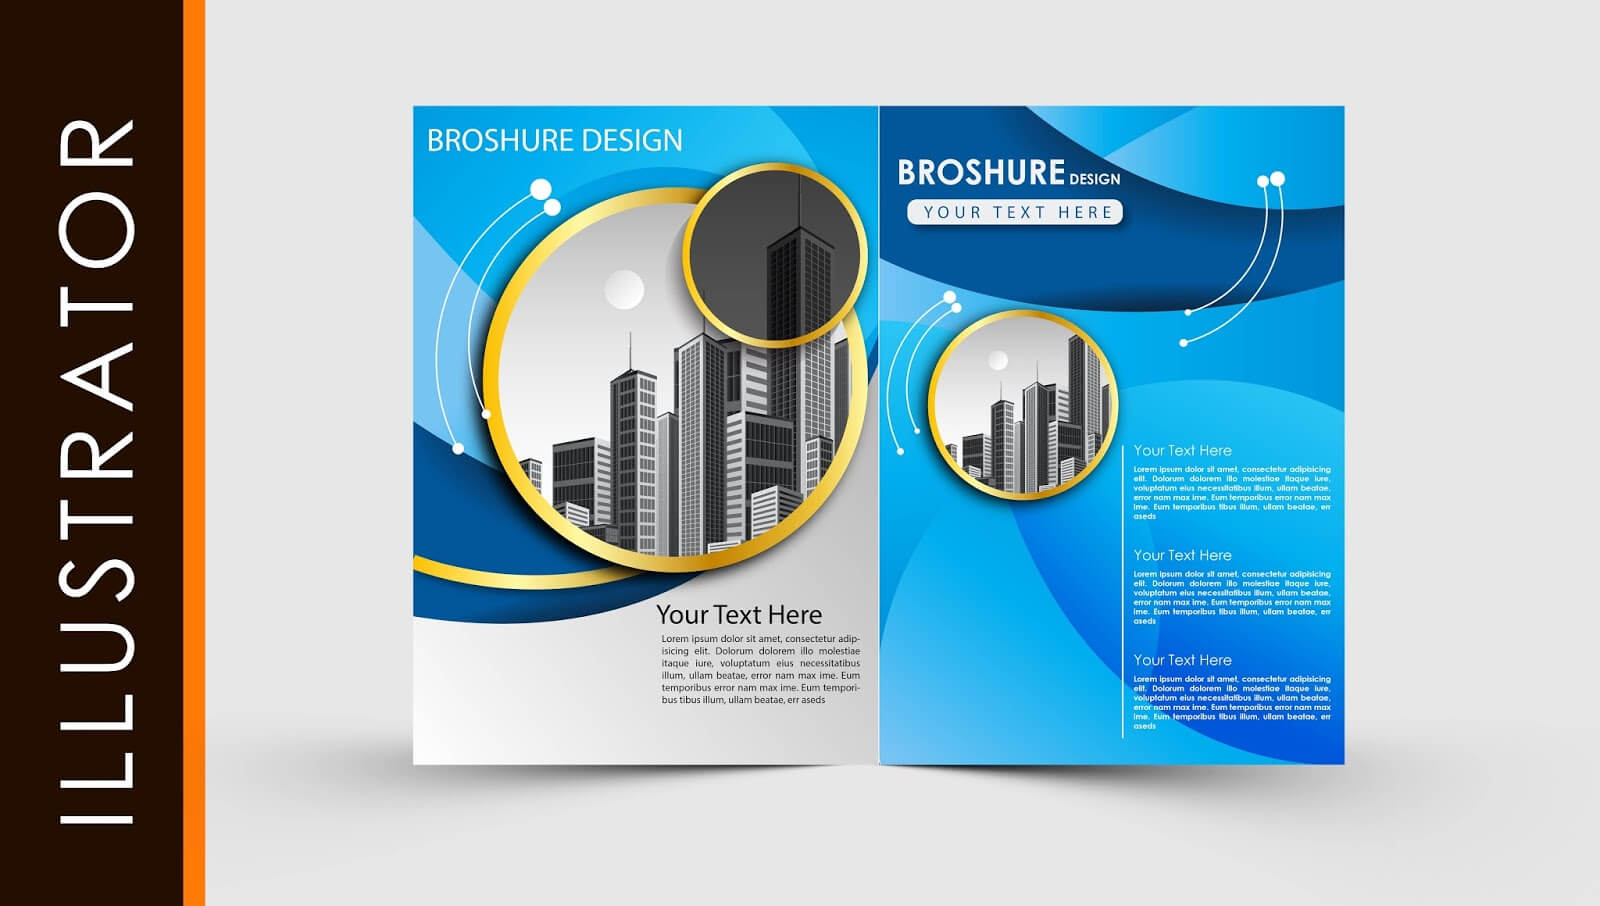 Free Download Adobe Illustrator Template Brochure Two Fold With Adobe Illustrator Brochure Templates Free Download